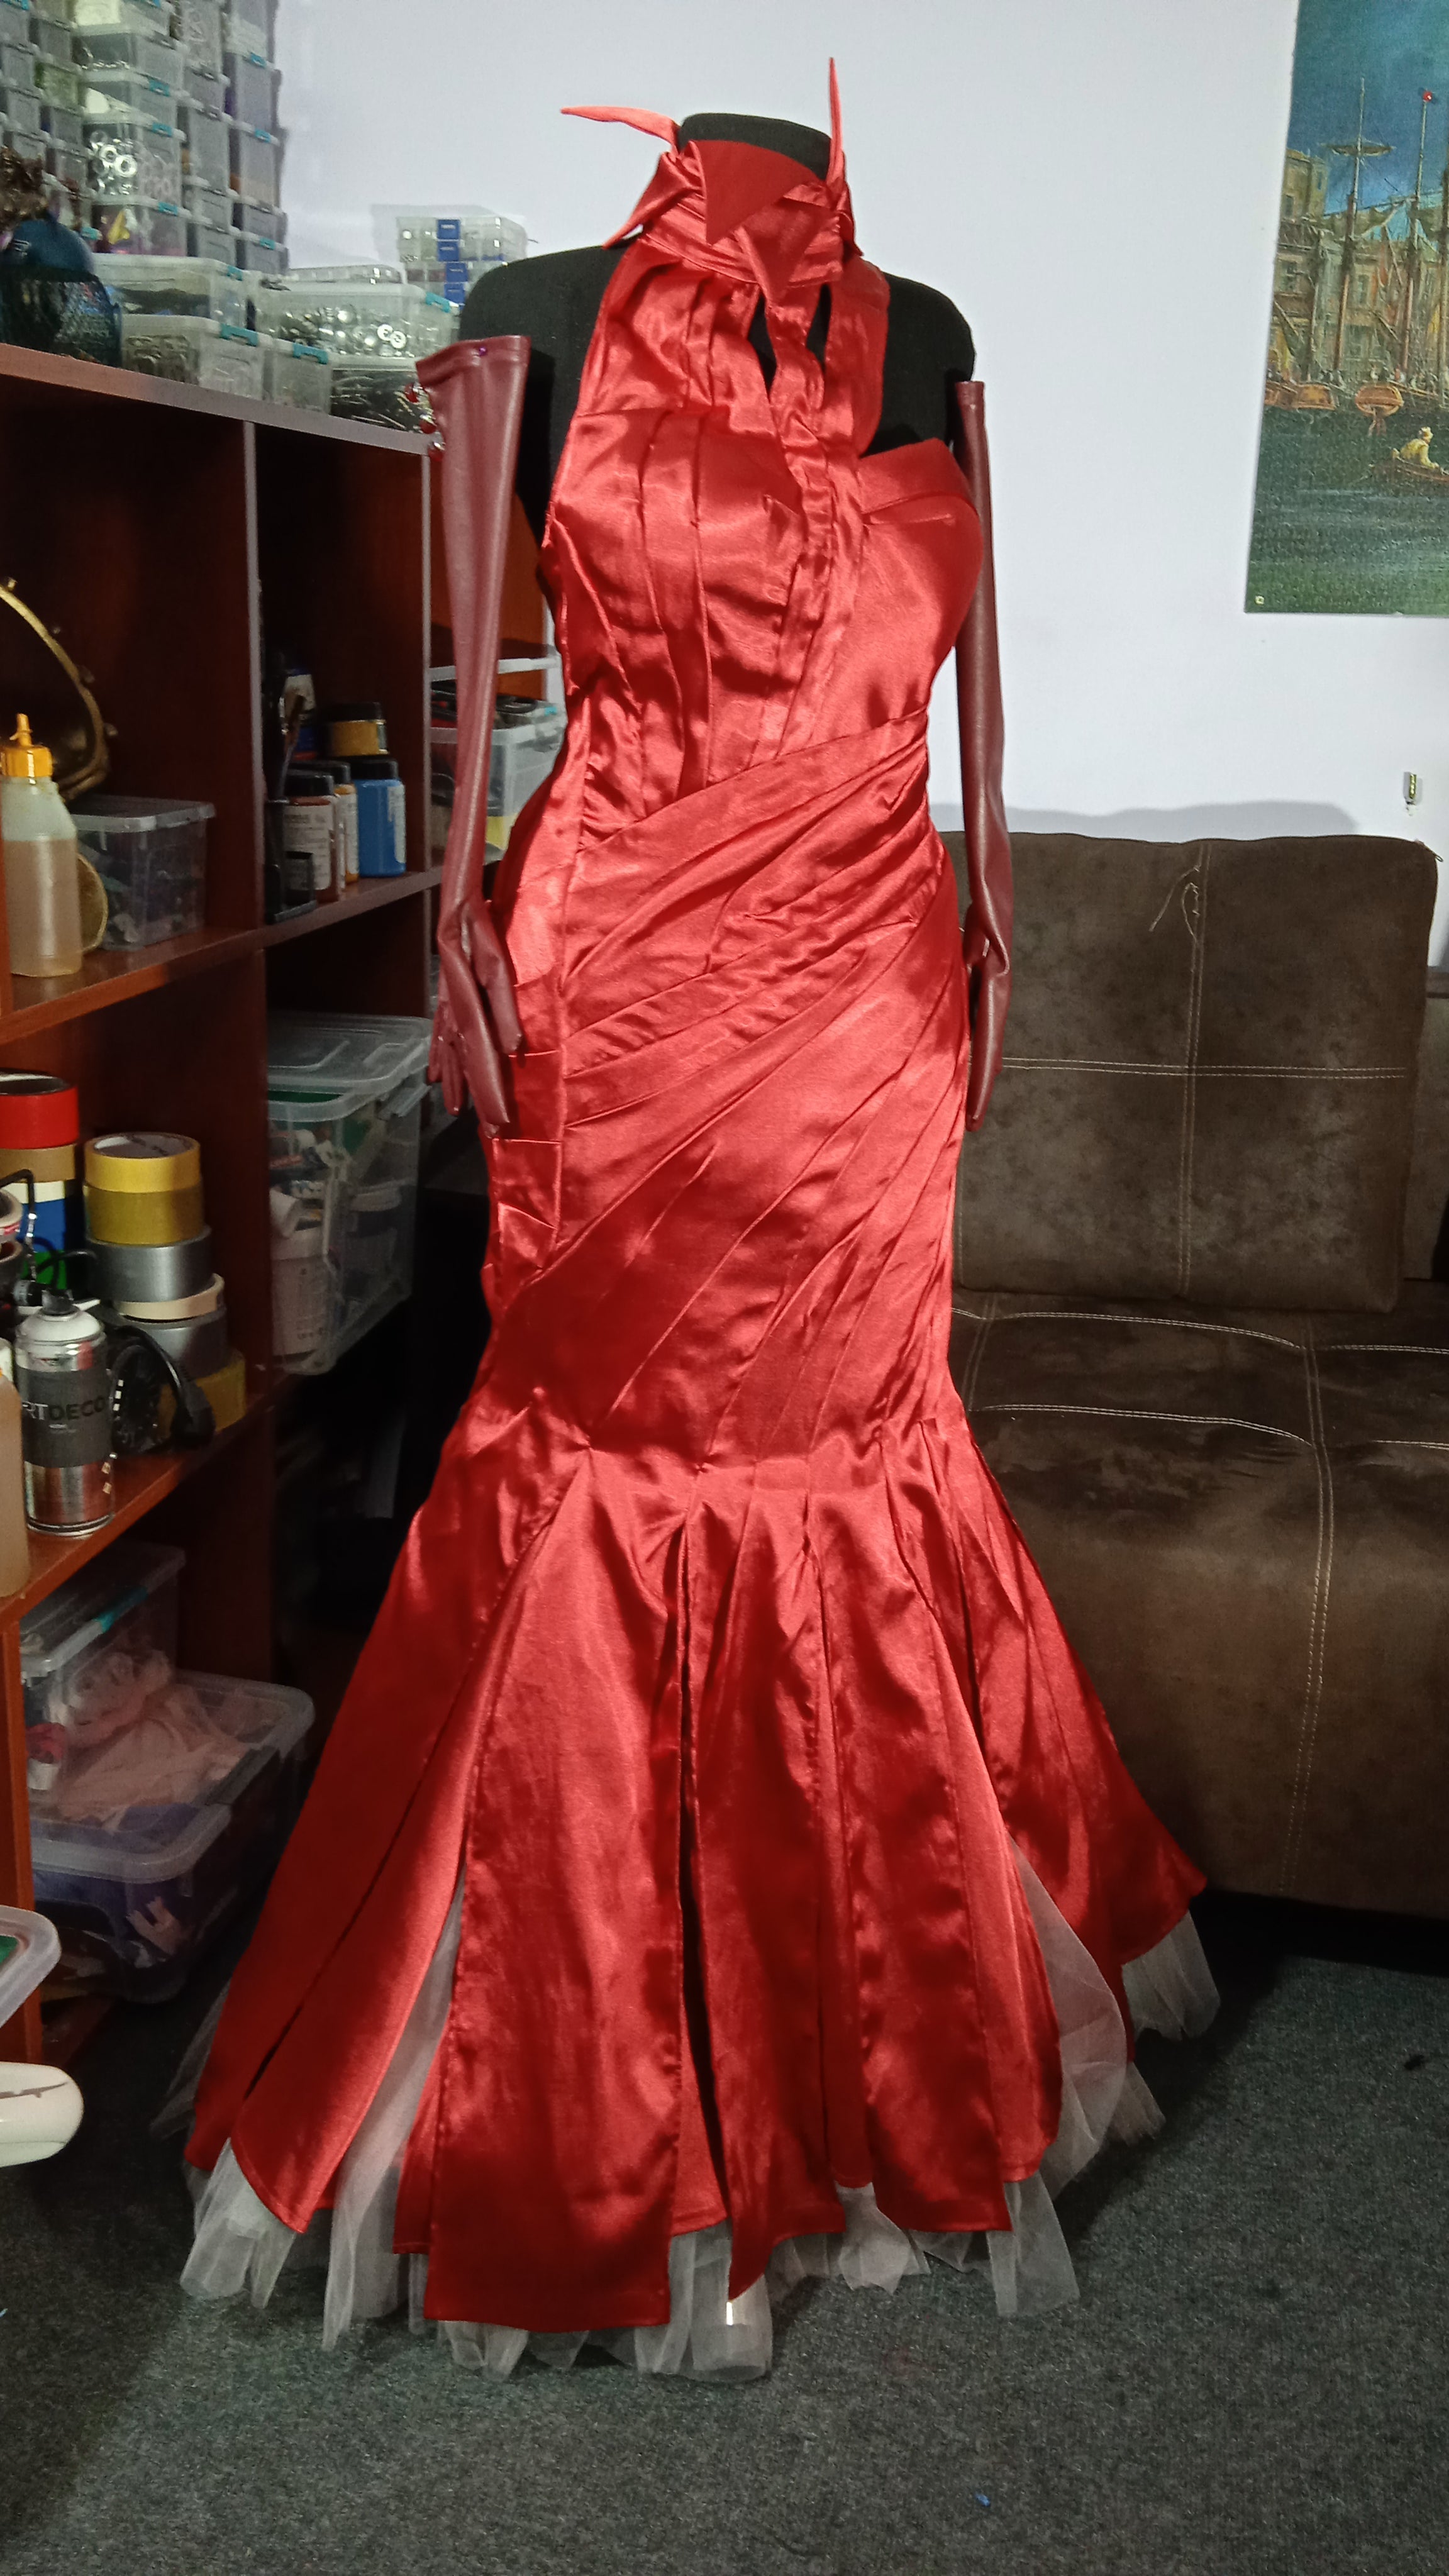 Cruella De Vil Cosplay Costume Emma Stone Red Dress With Wig - CosSuits